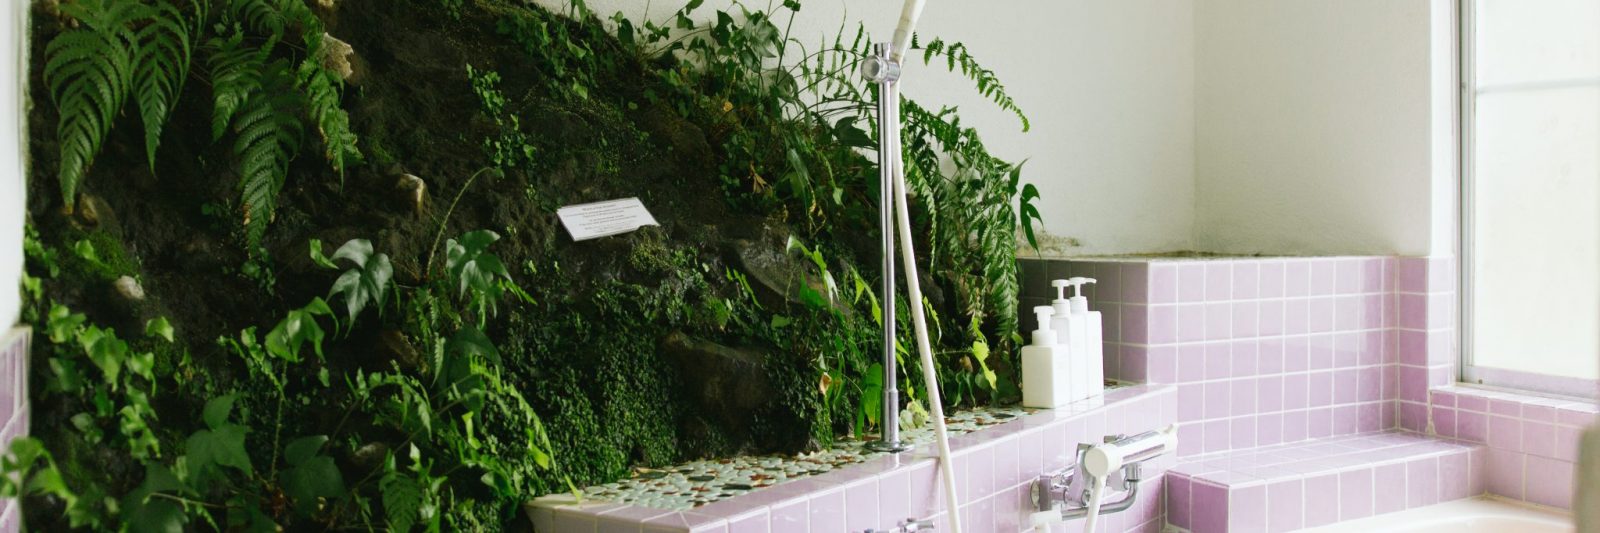 Shower room at Retreat wabi-sabi